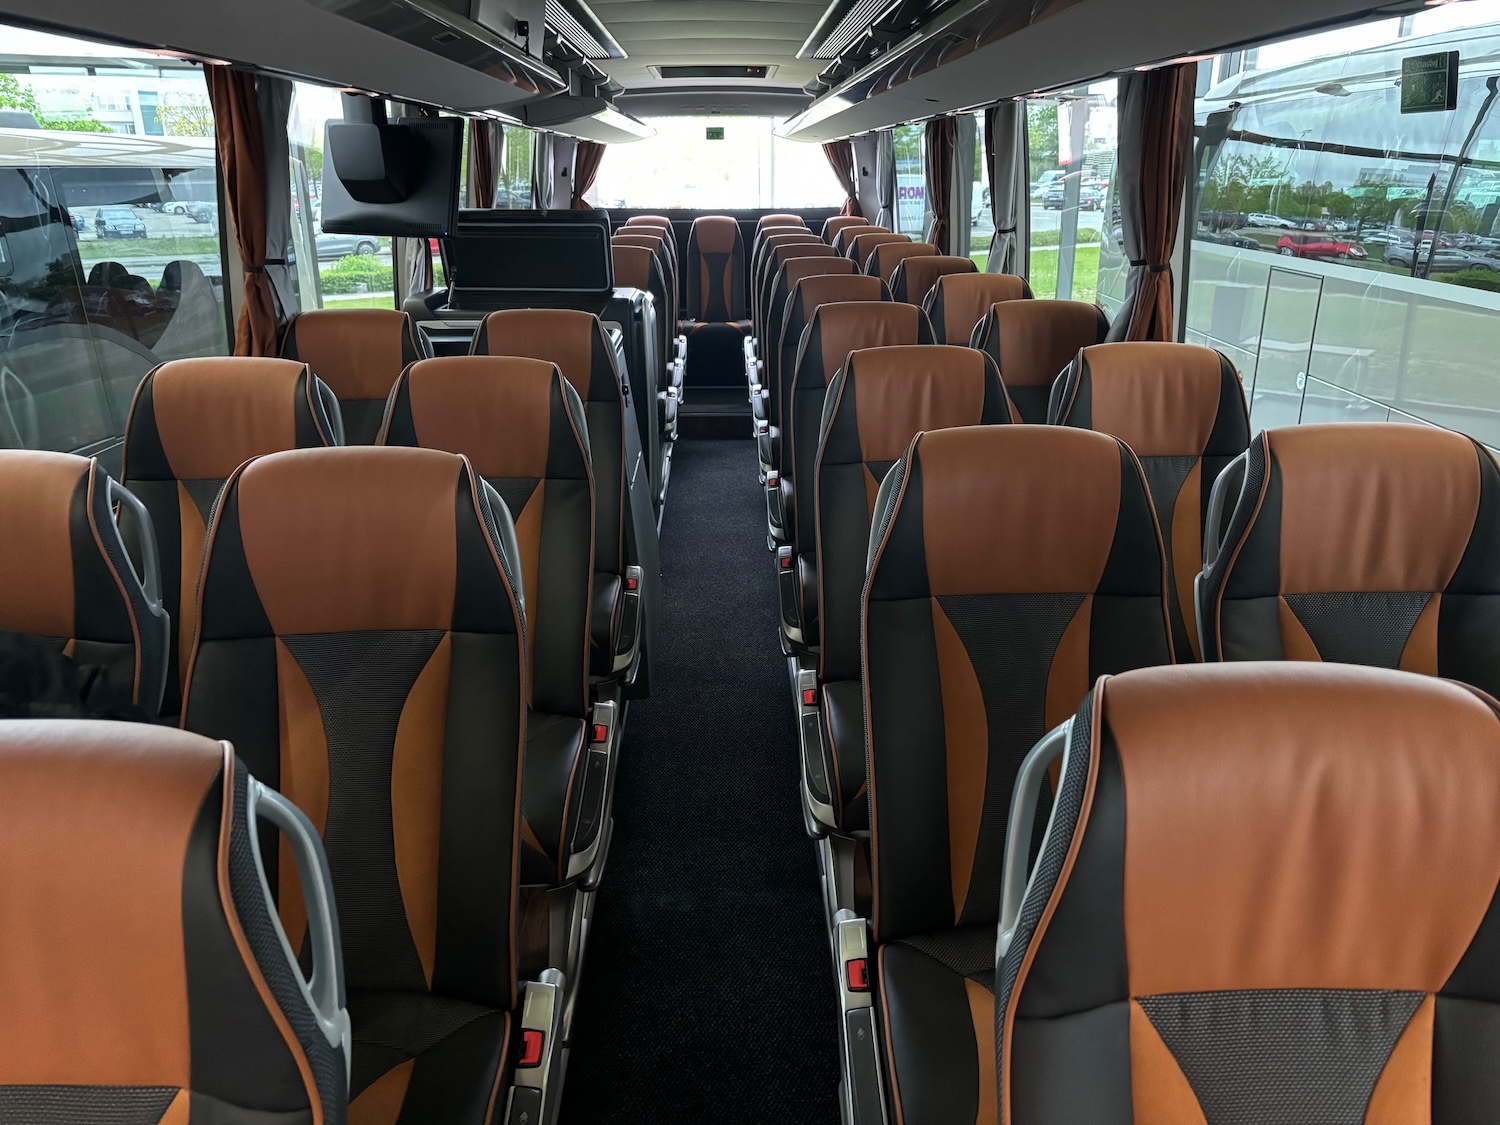 Midibus SETRA S 511 HD midi coach inside